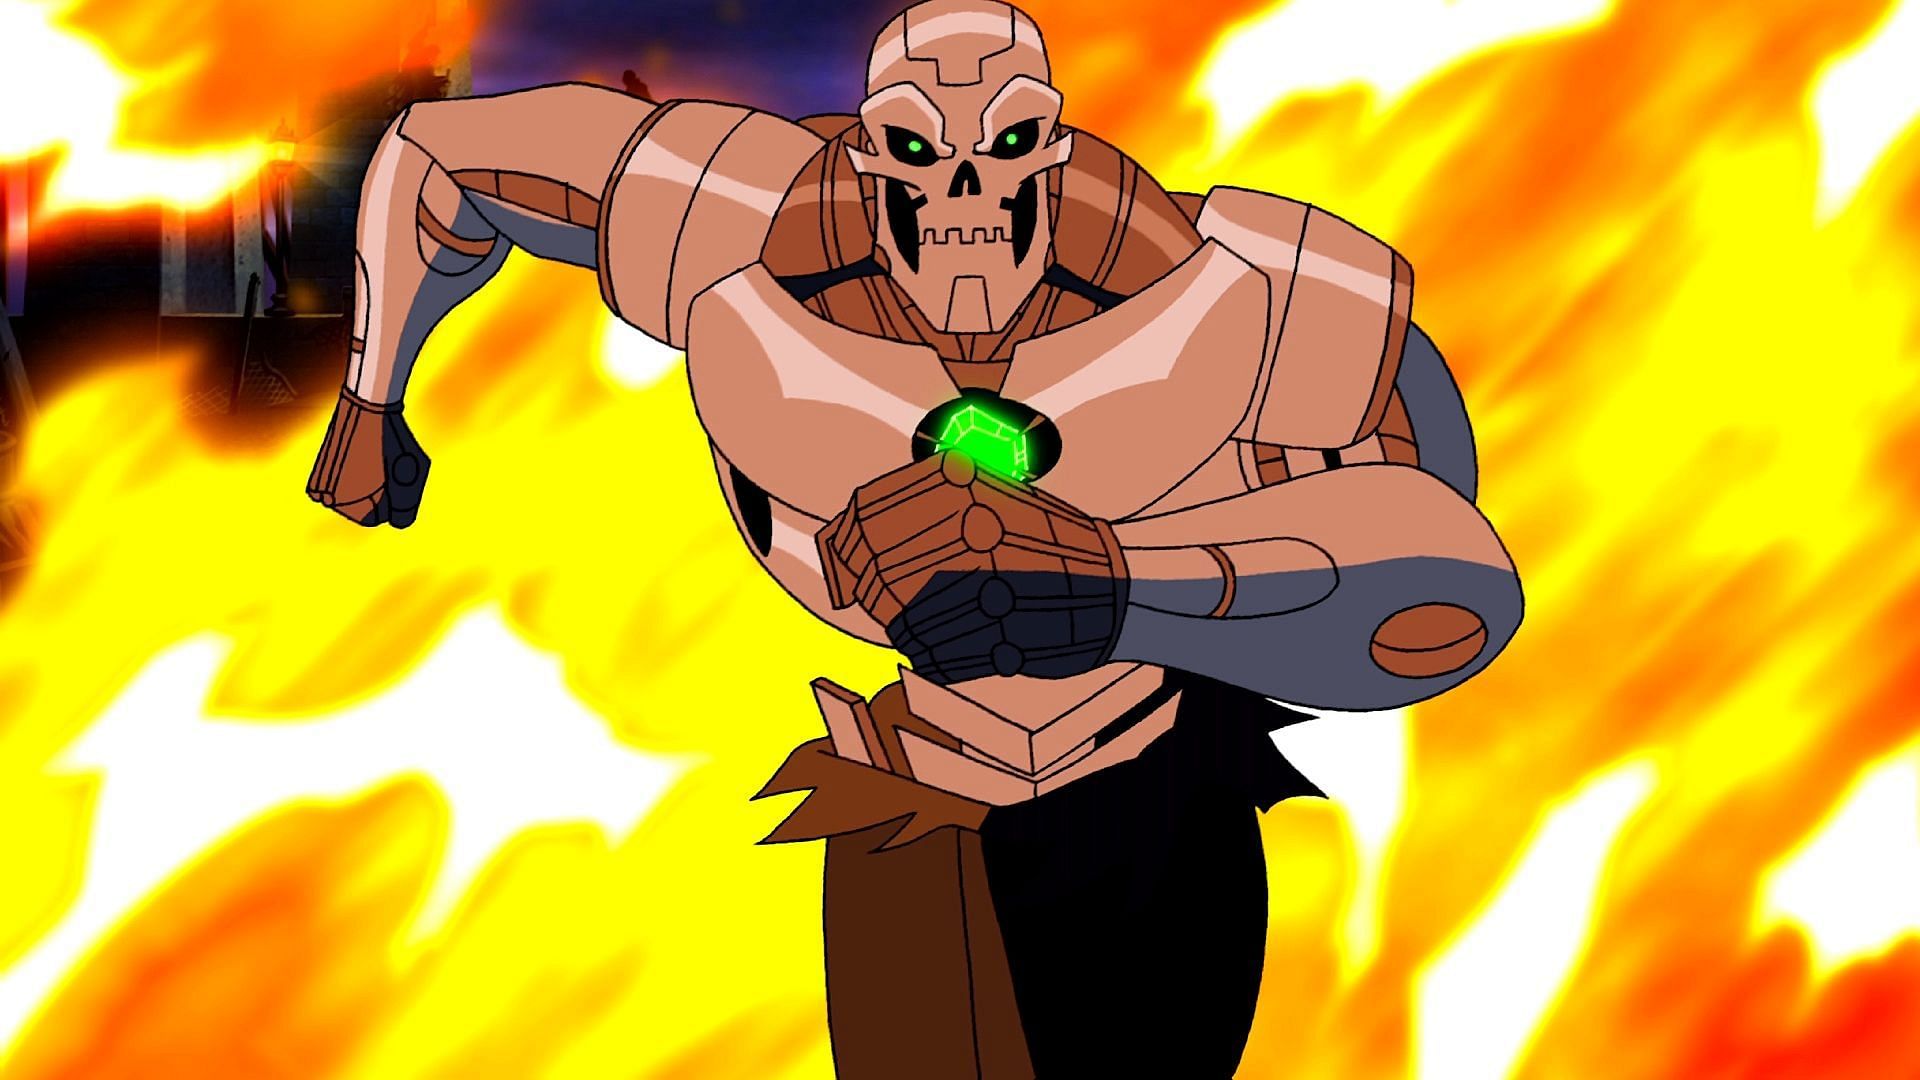 Metallo is a cyborg villain in the DC Universe (Image via DC)